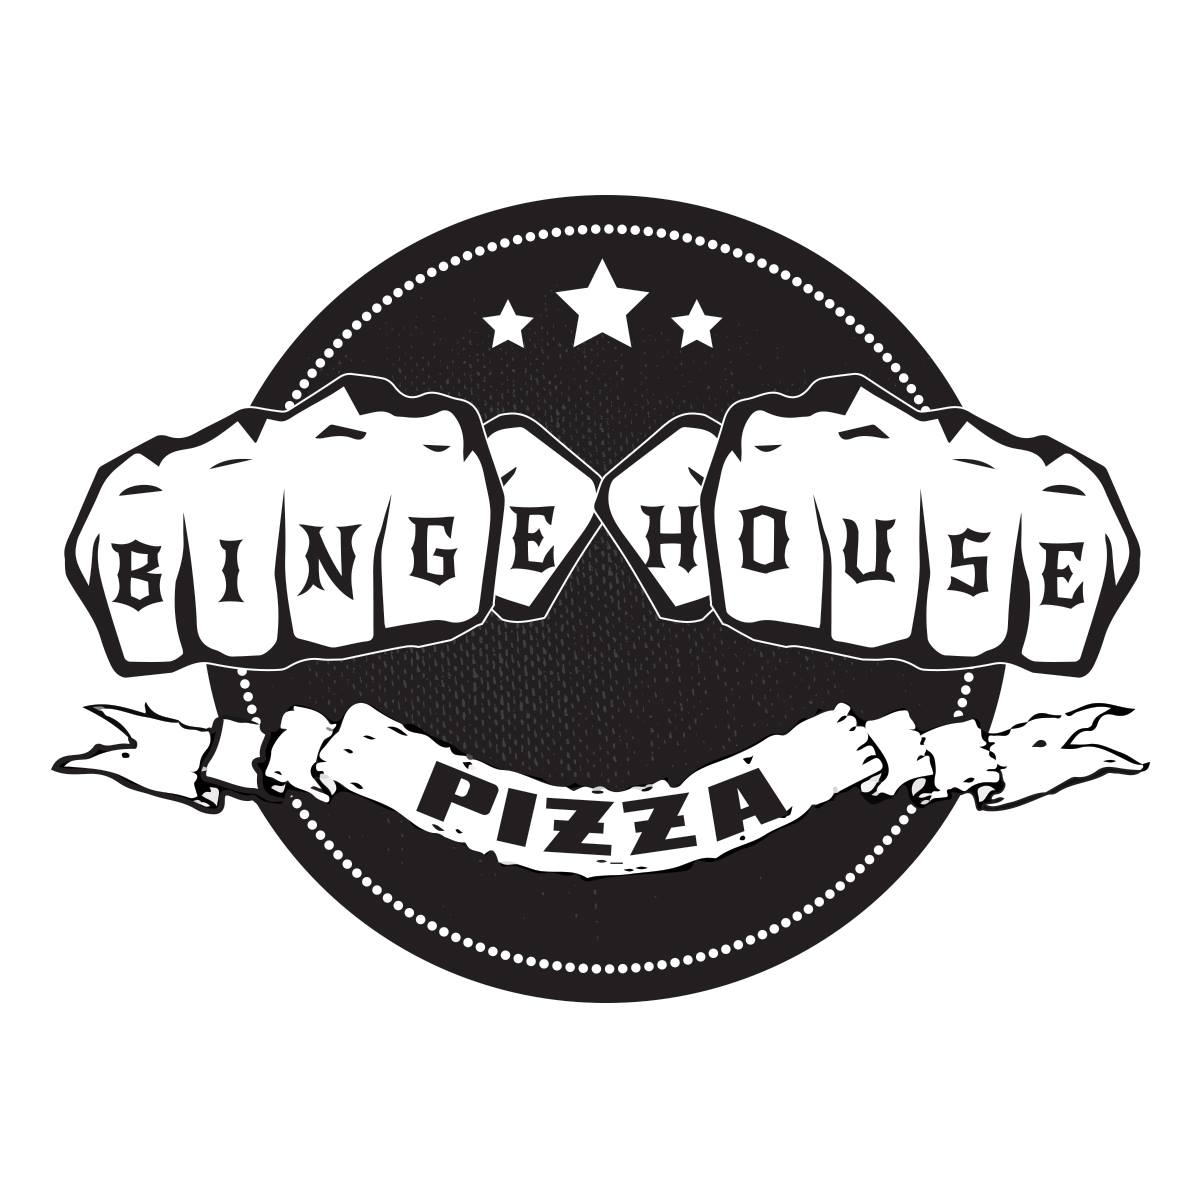 Binge House Pizza Logo